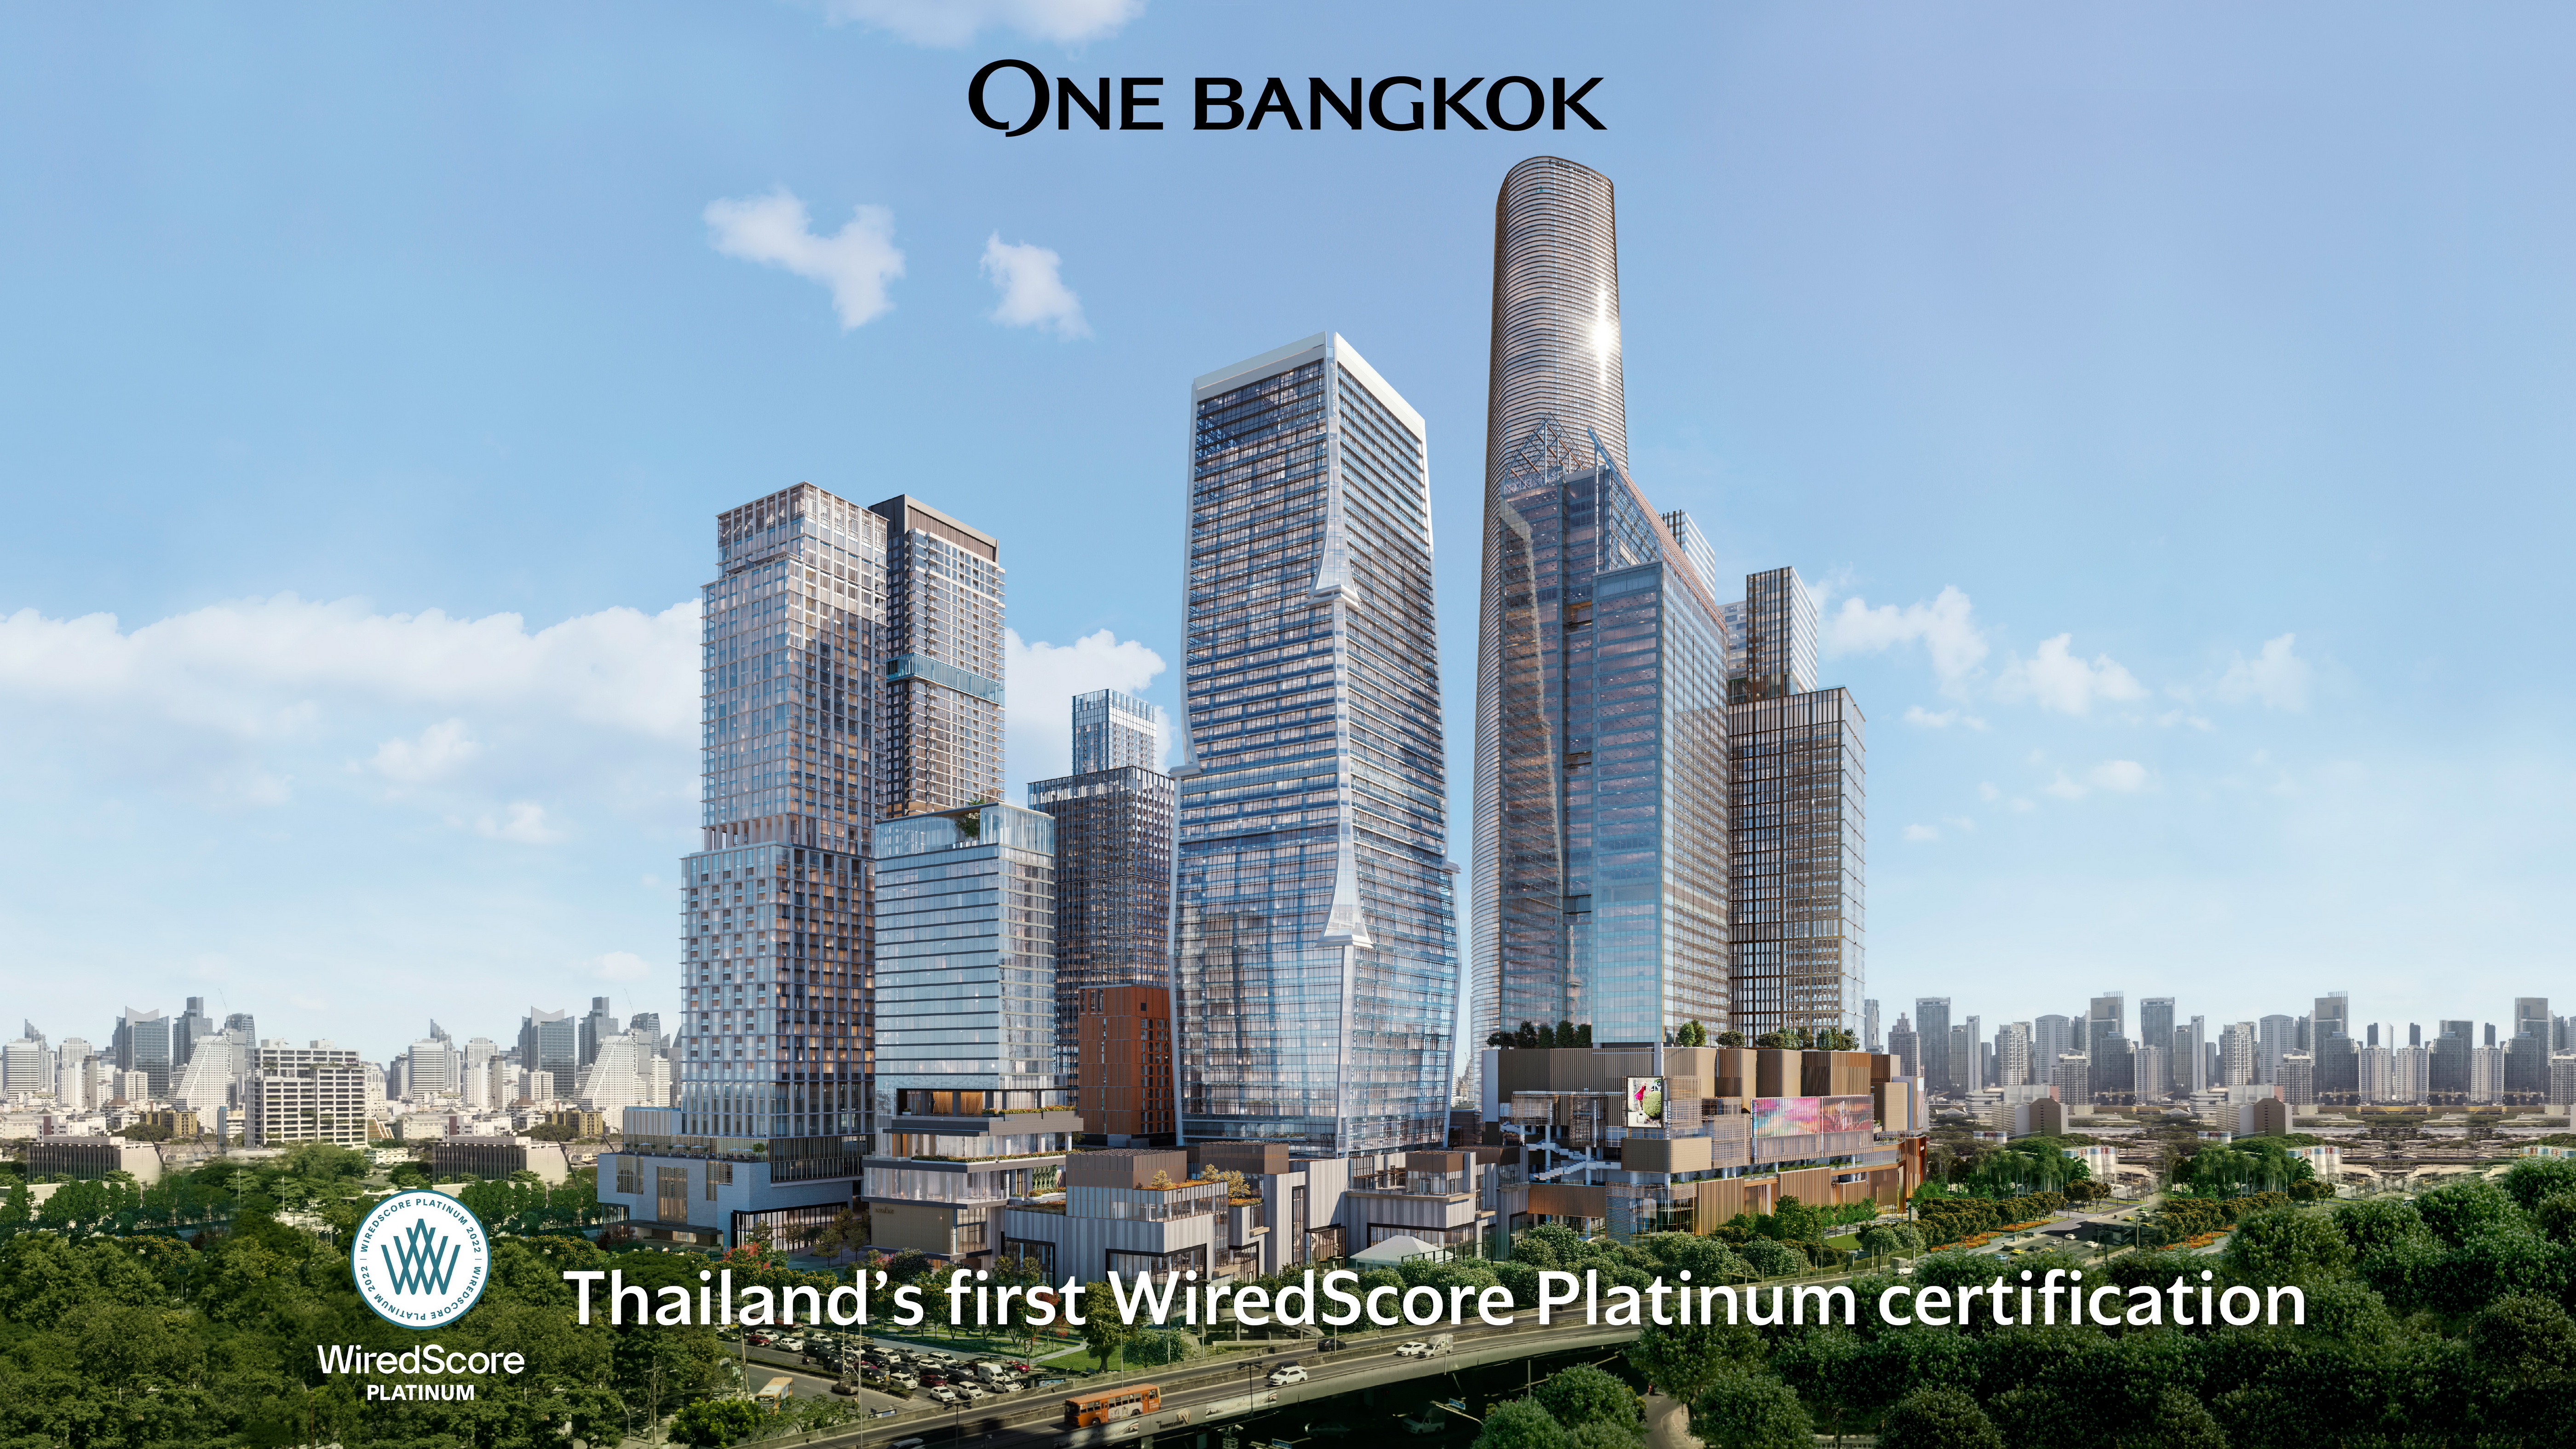 One Bangkok Achieves Thailand’s First Platinum Wiredscore Certification